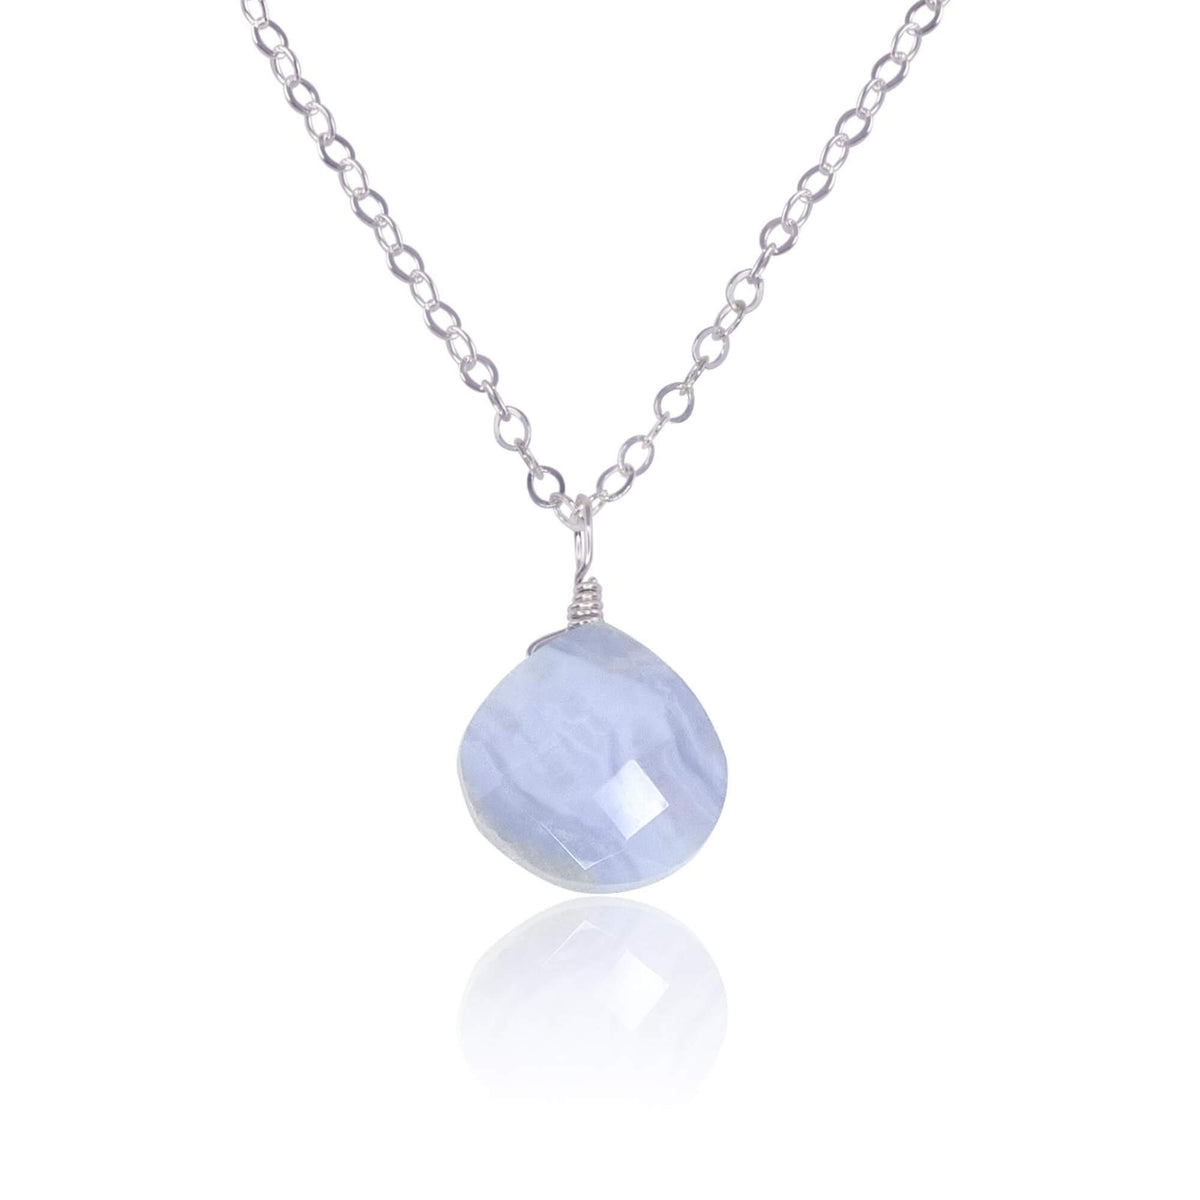 Teardrop Necklace - Blue Lace Agate - Stainless Steel - Luna Tide Handmade Jewellery